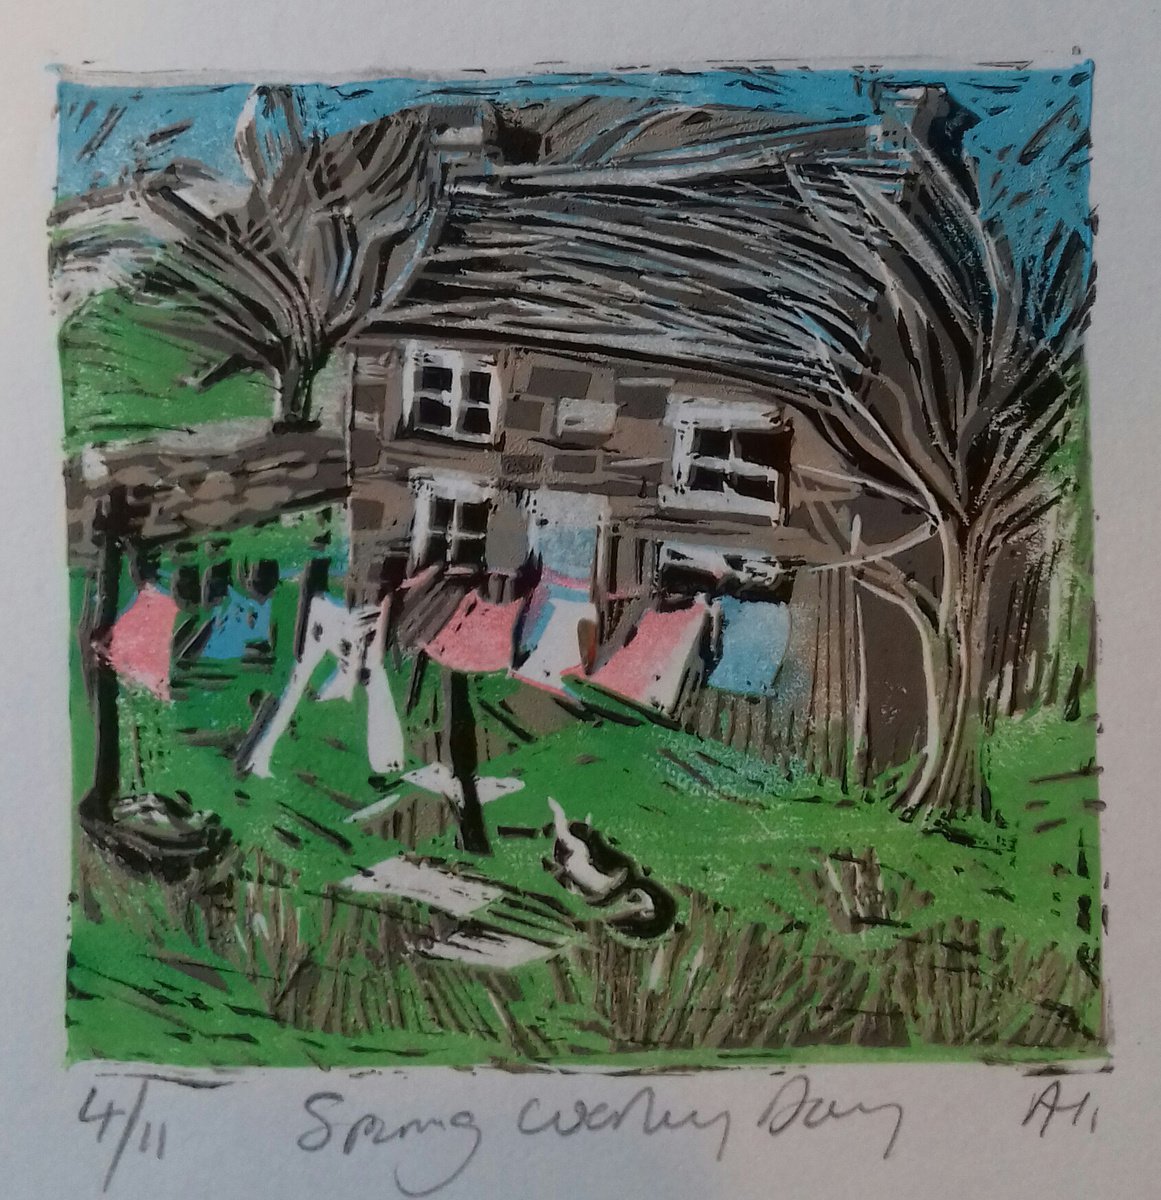 Spring Washing Day by Ann Kilroy